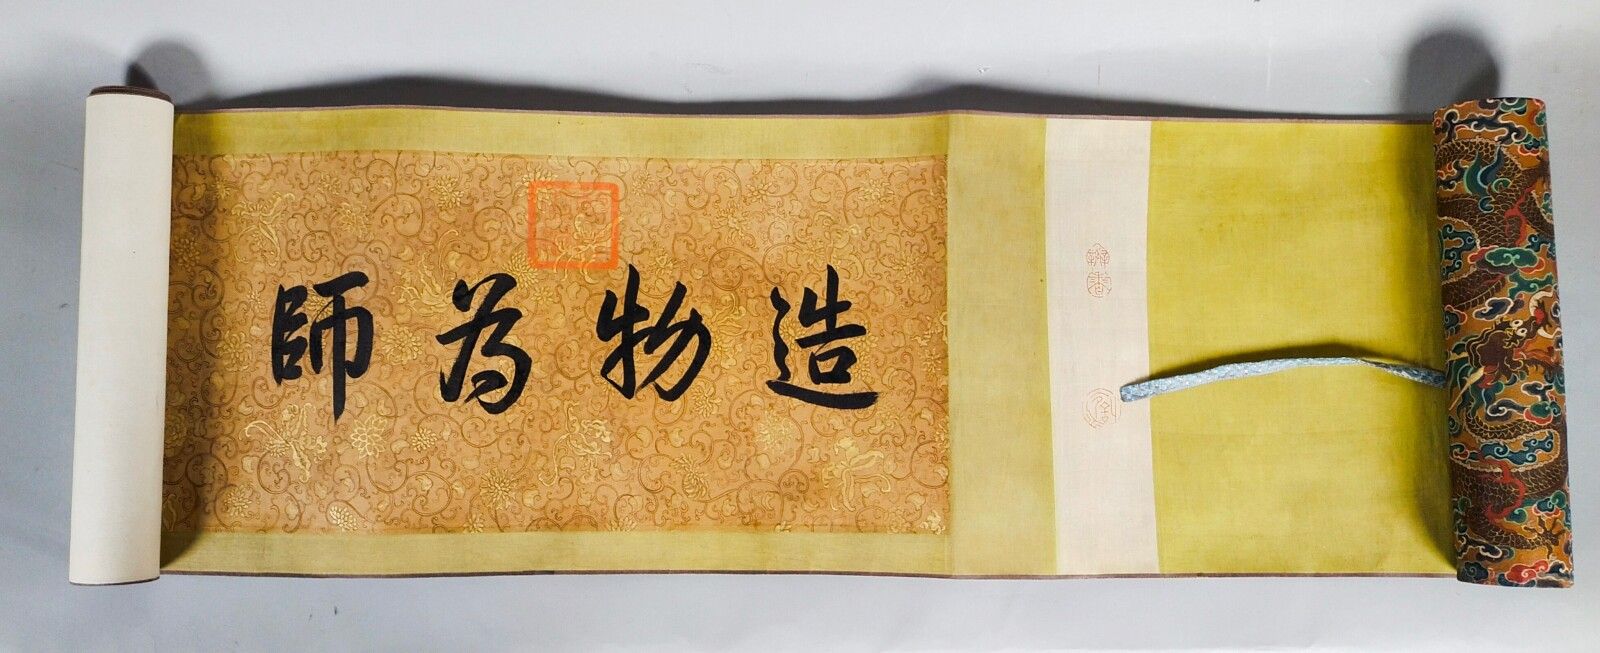 Null CHINE, dynastine Shing

Grand rouleau à motifs peints d'objets usuels